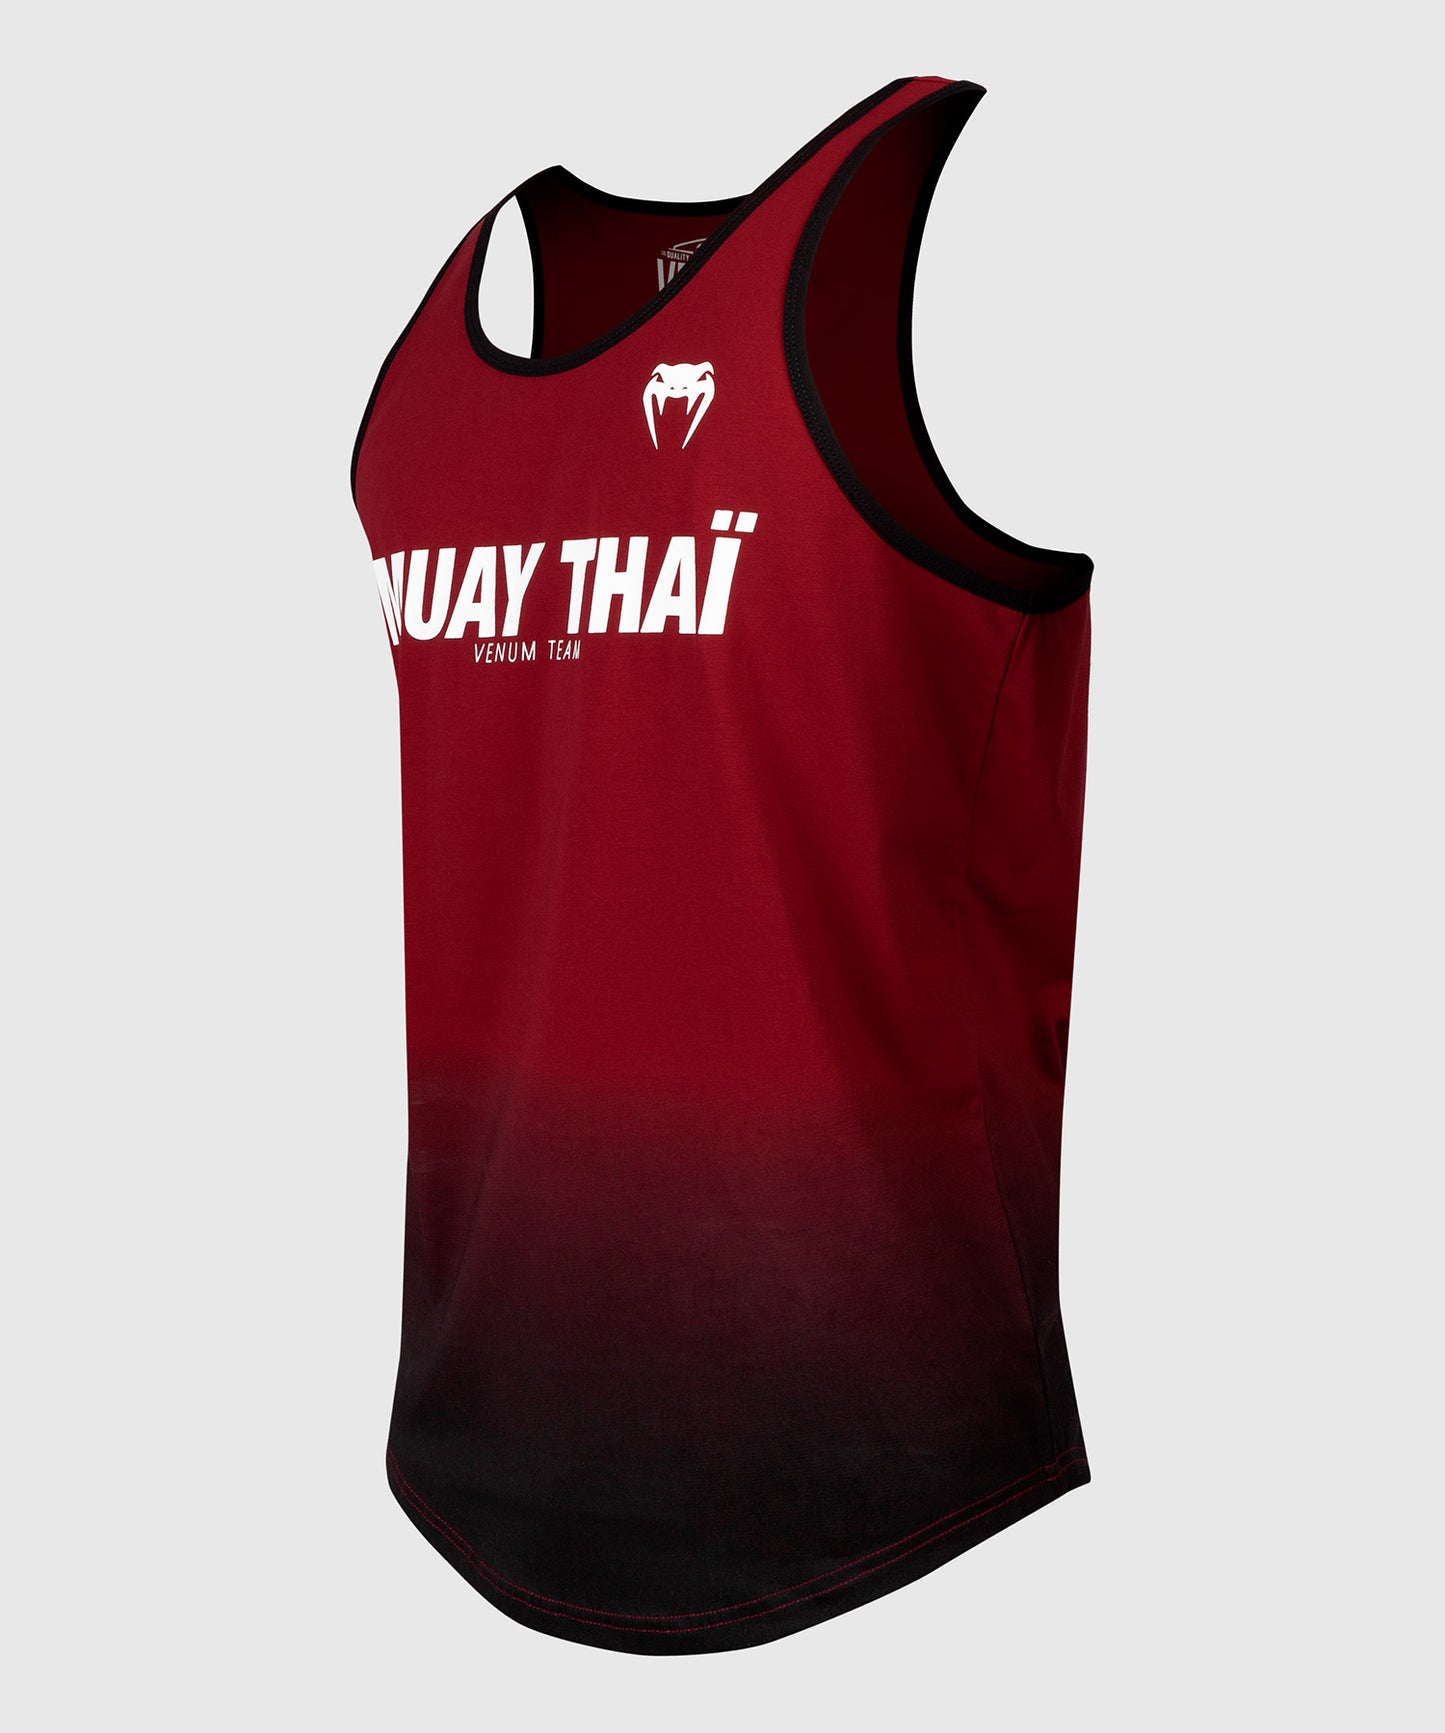 Camiseta de tirantes Muay Thai VT de Venum - Vino tinto/Negro